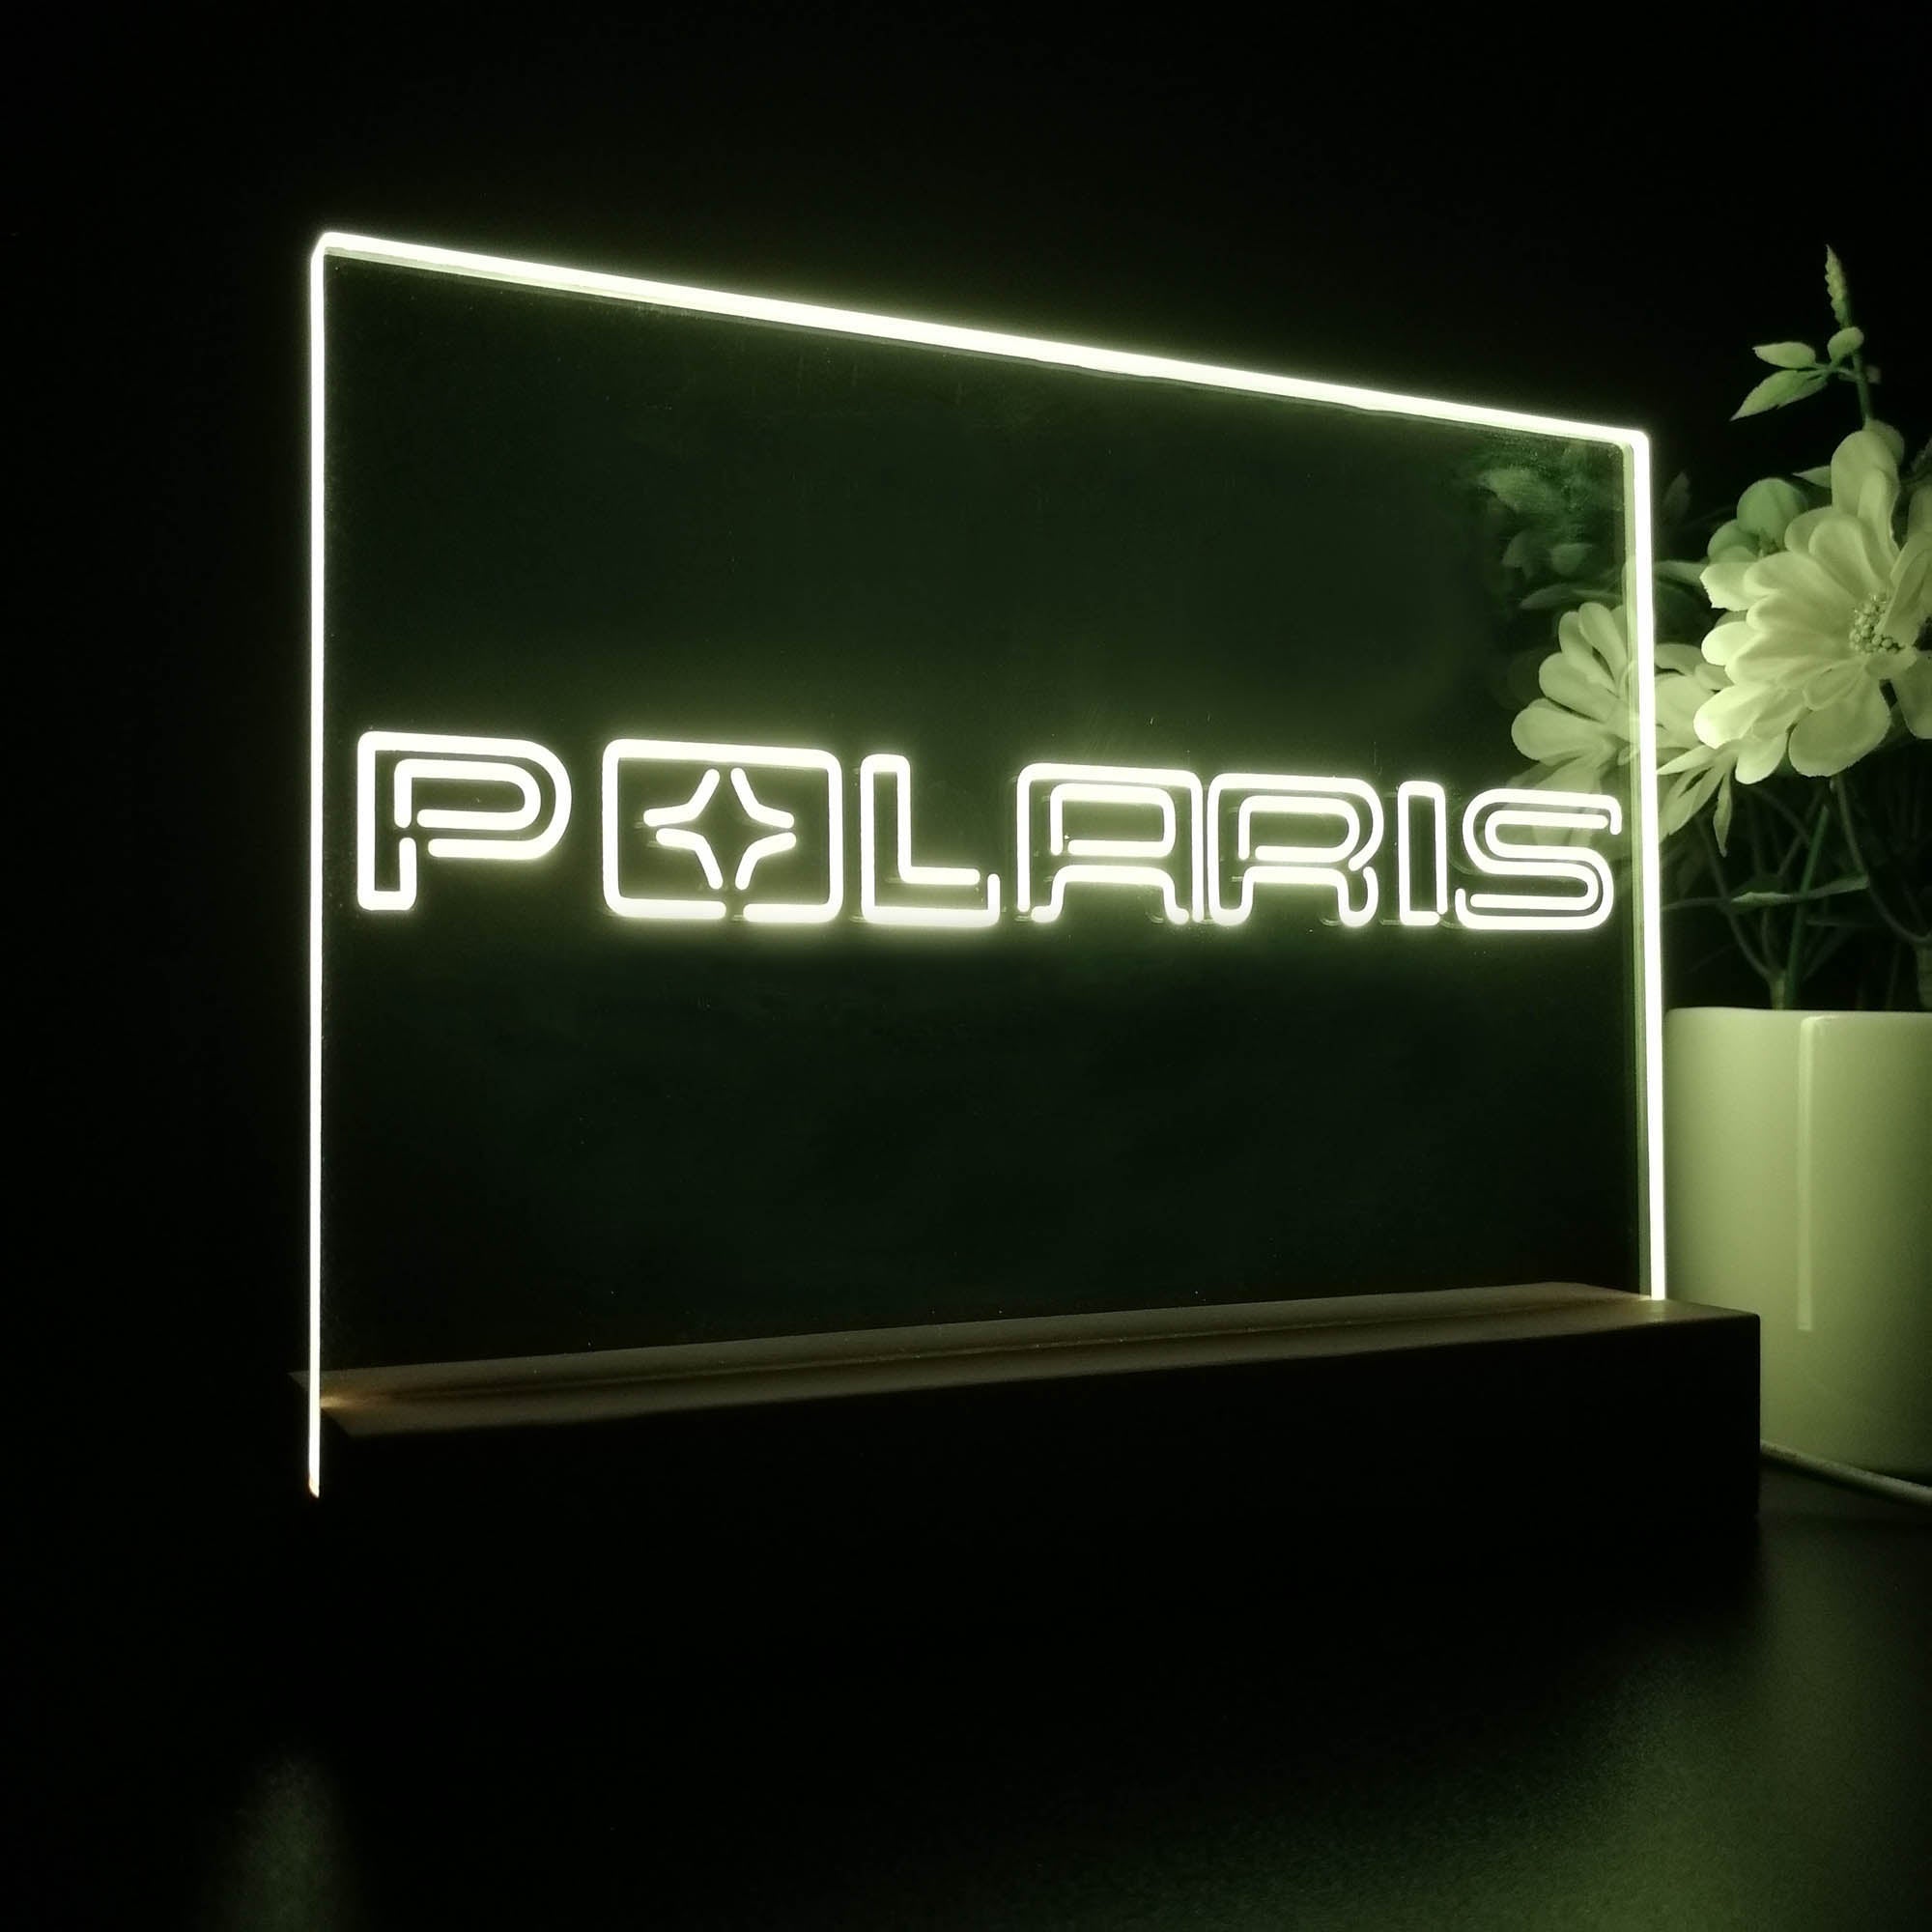 Polaris Snowmobile 3D Illusion Night Light Desk Lamp